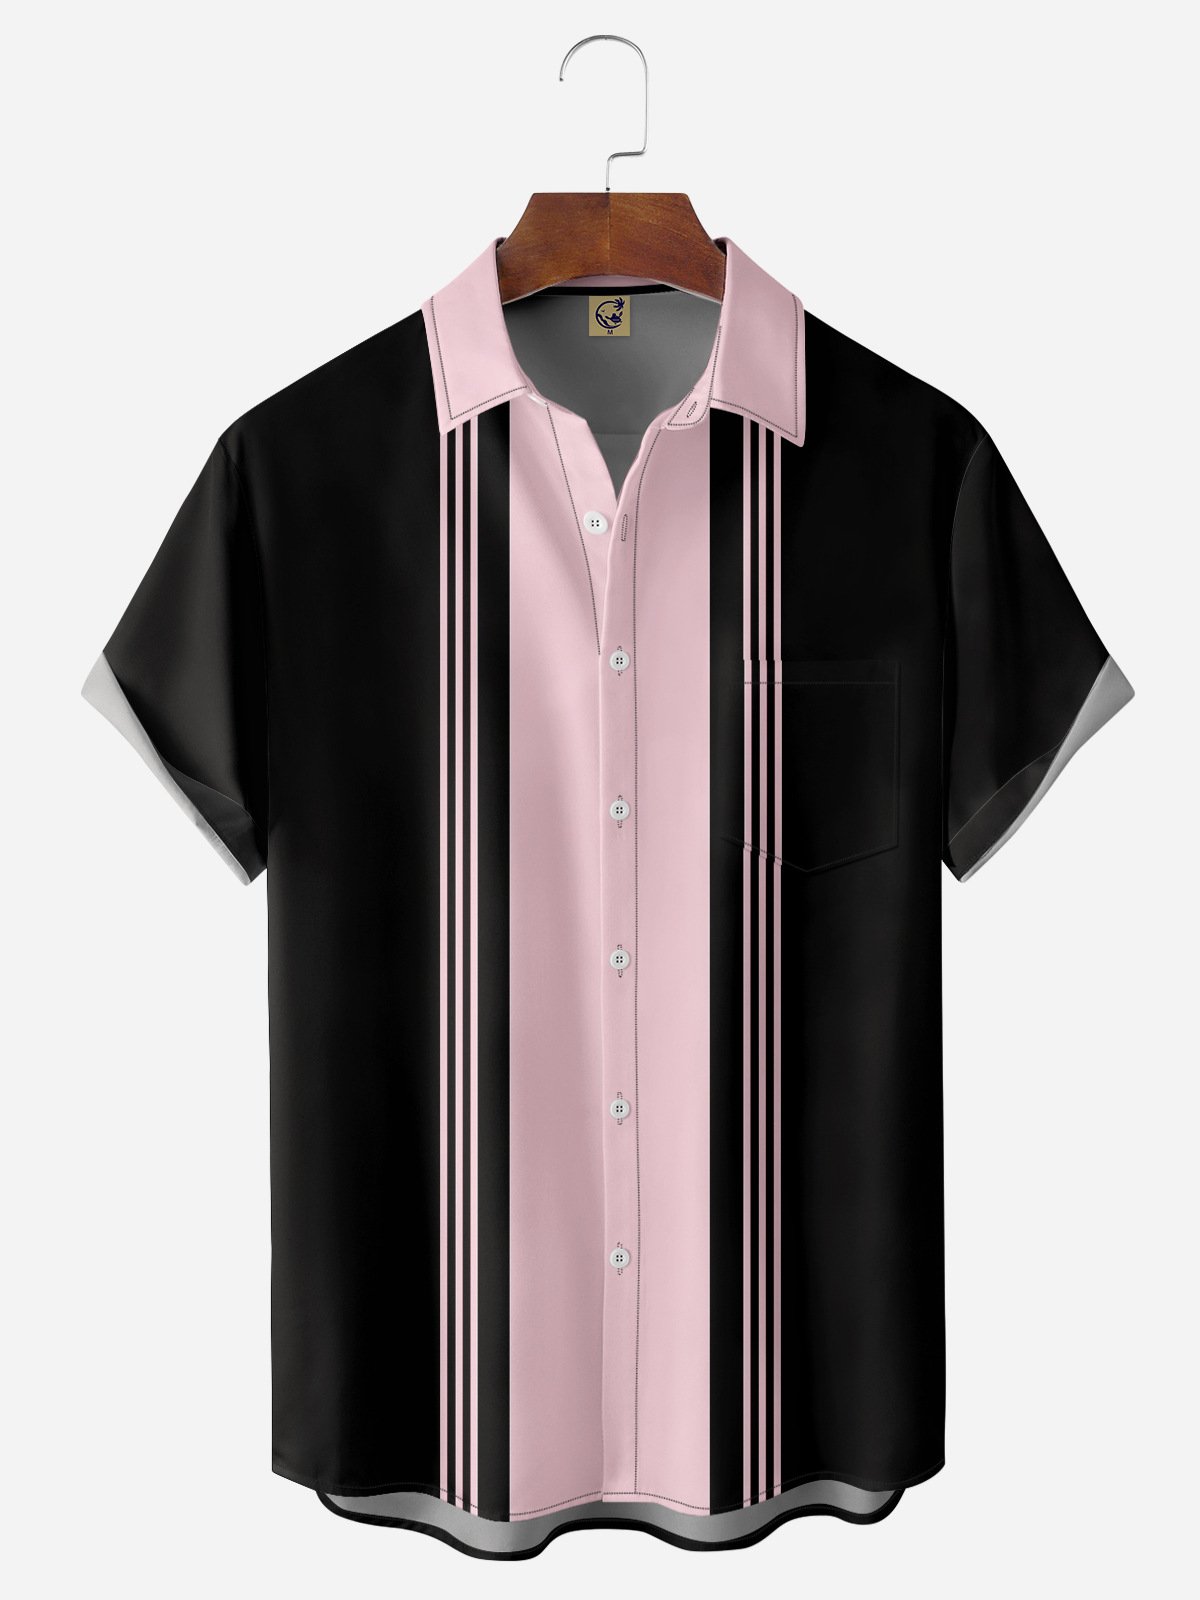 Hardaddy Geometric Lines Chest Pocket Short Sleeve Bowling Shirt